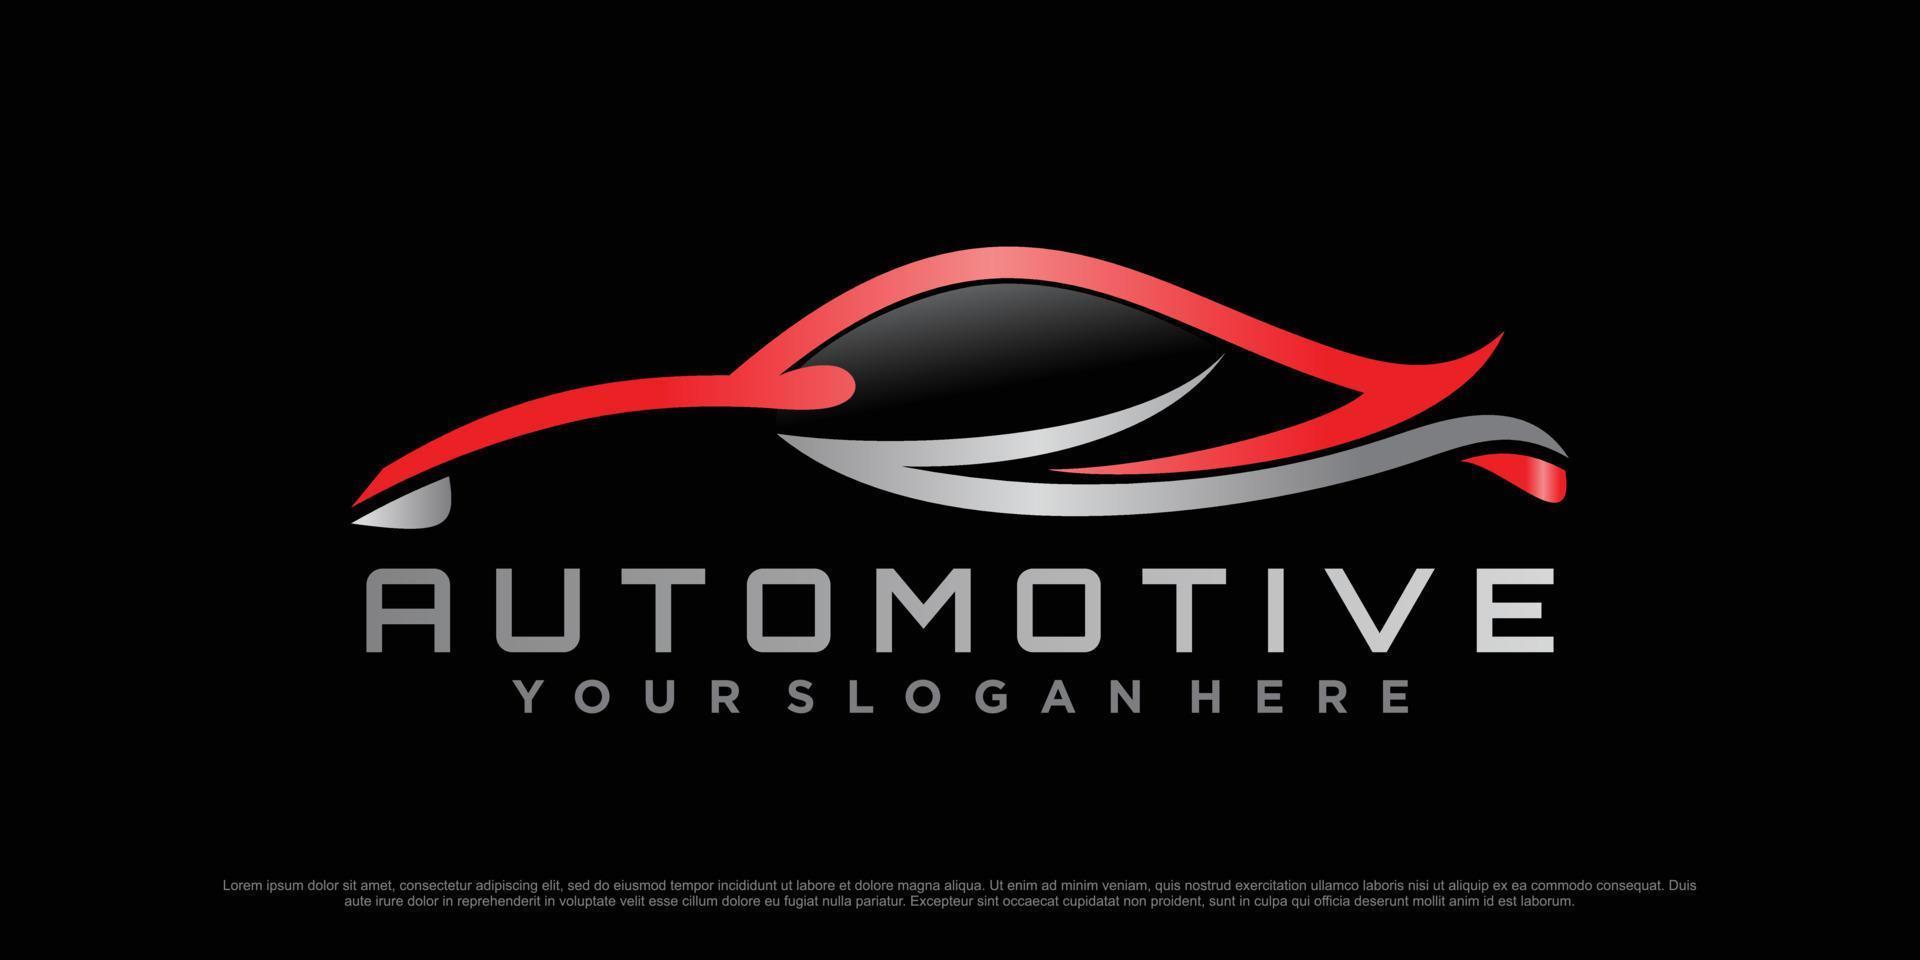 Automobil-Logo-Design mit Sportwagen-Symbol und kreativem modernem Konzept-Premium-Vektor vektor